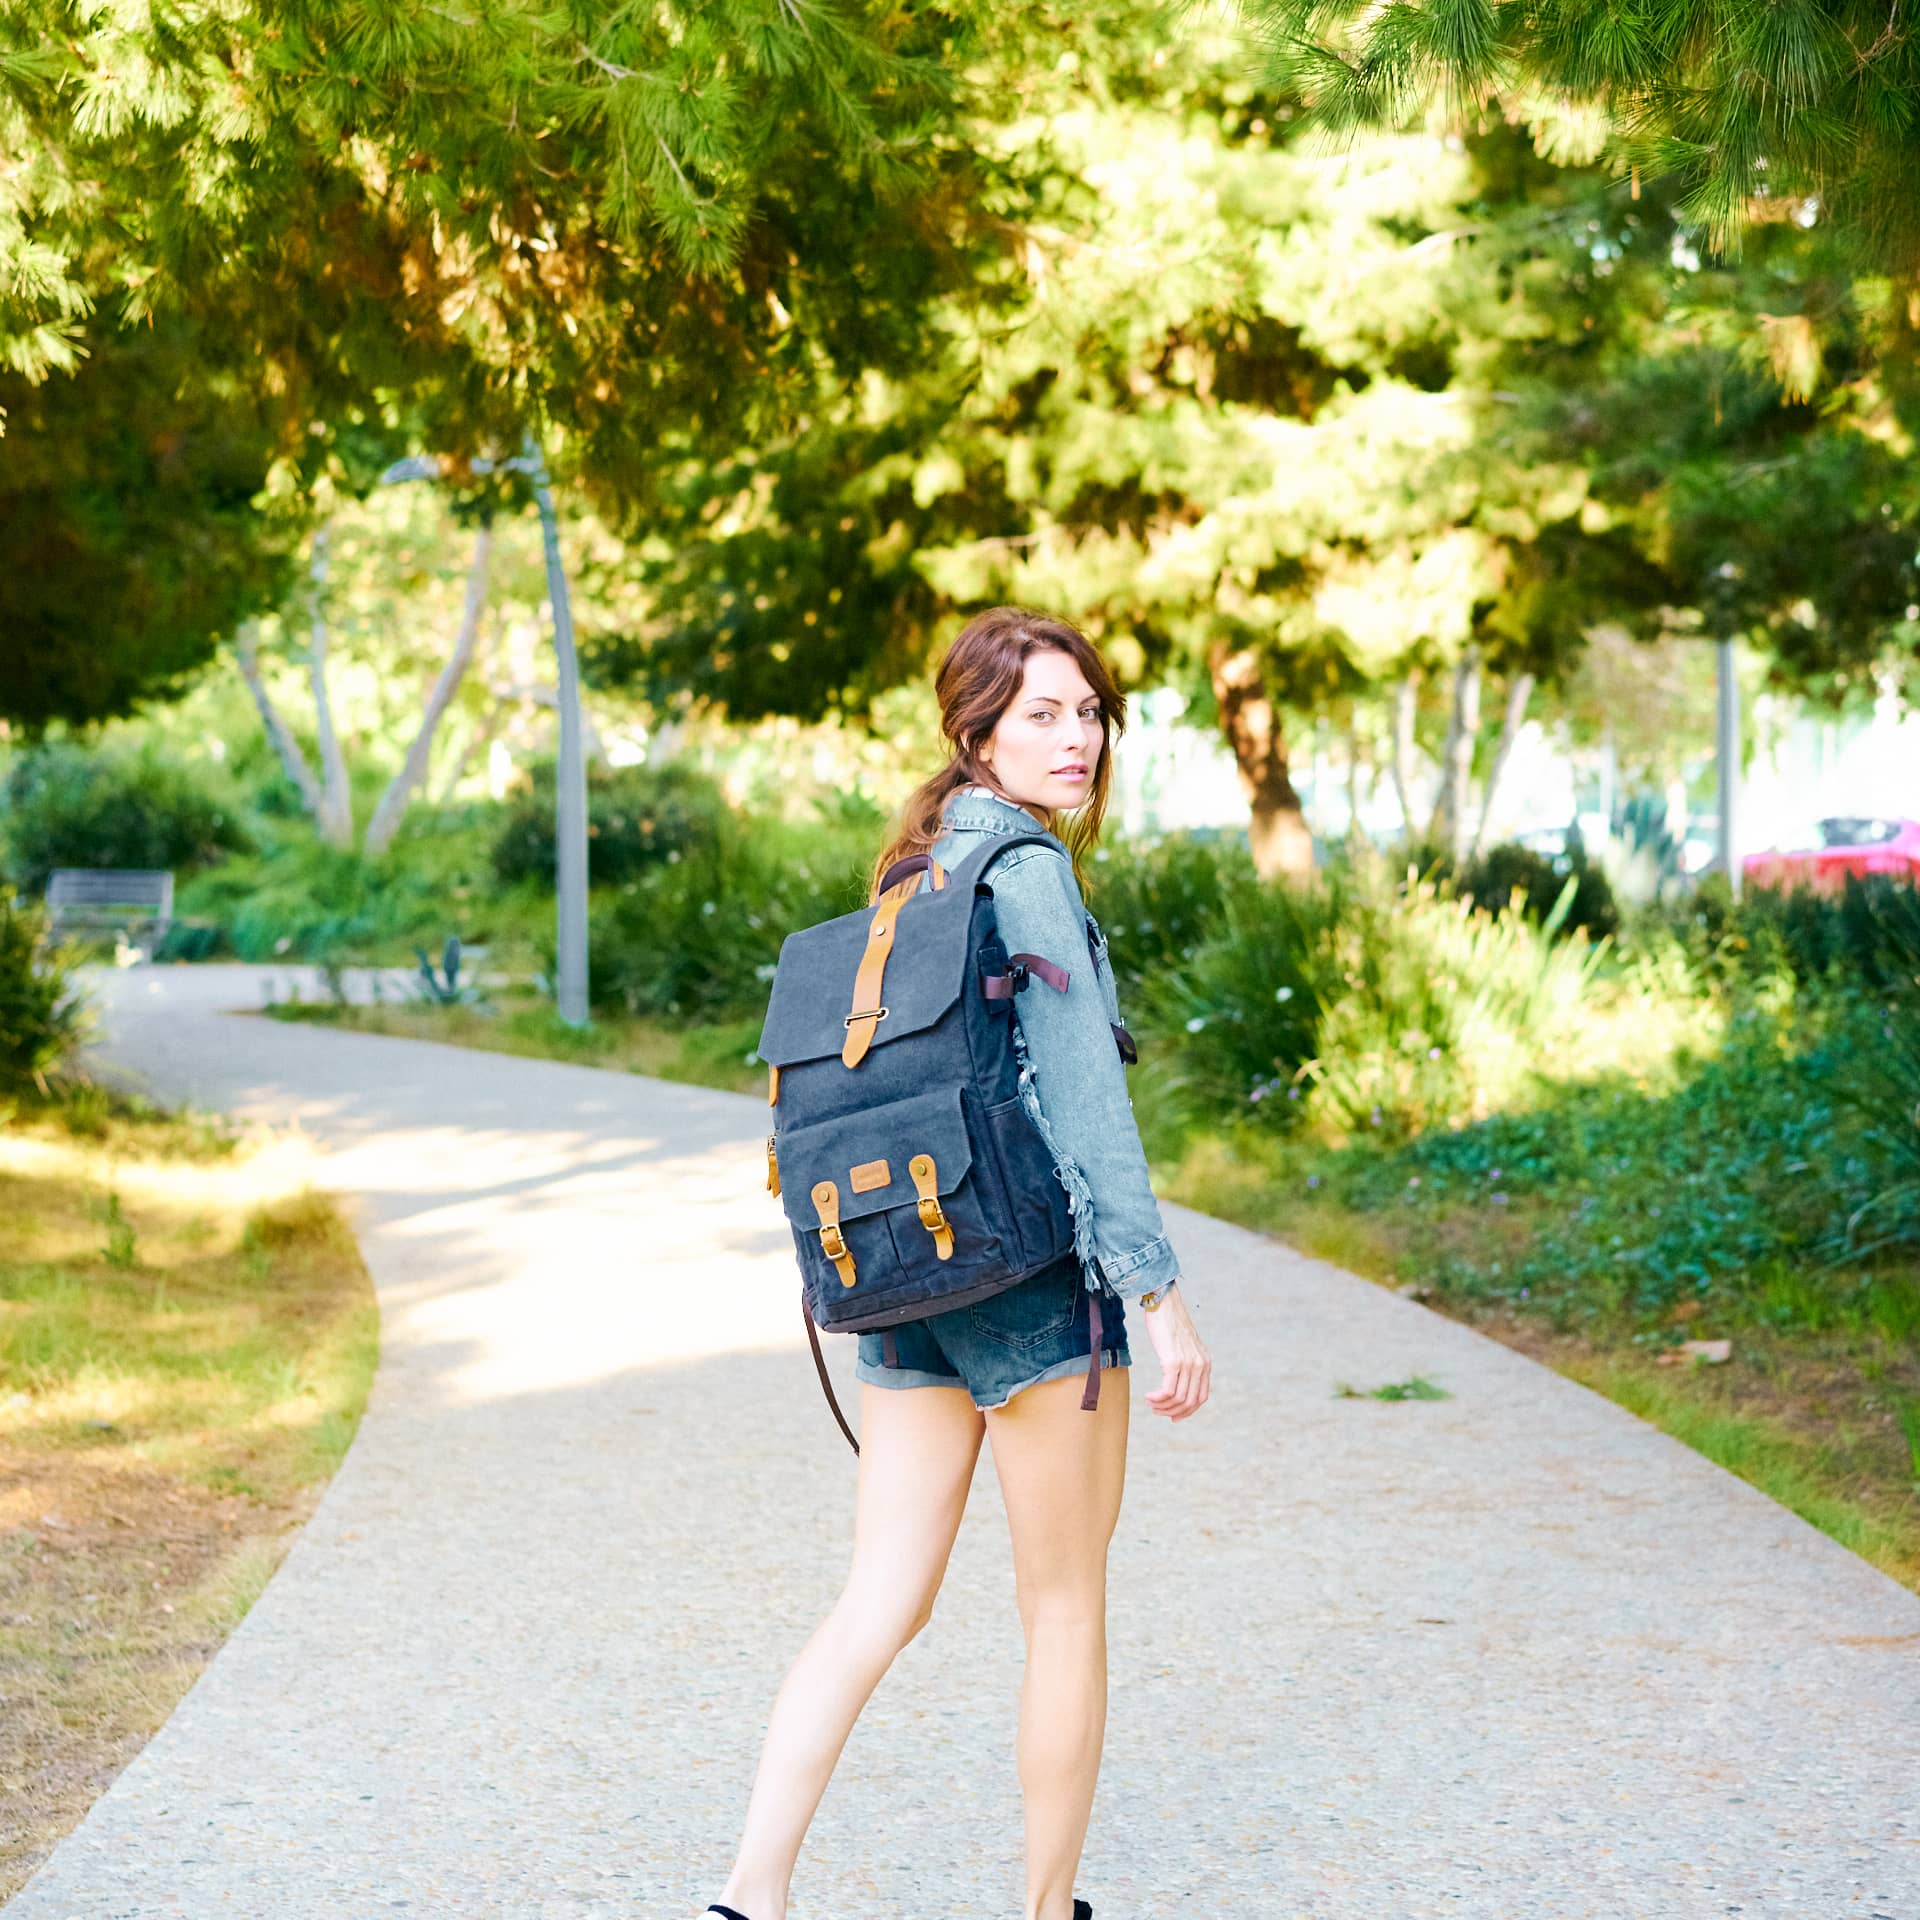 Best Camera Backpacks for Women - DSLR Camera Bag - Sunny 16